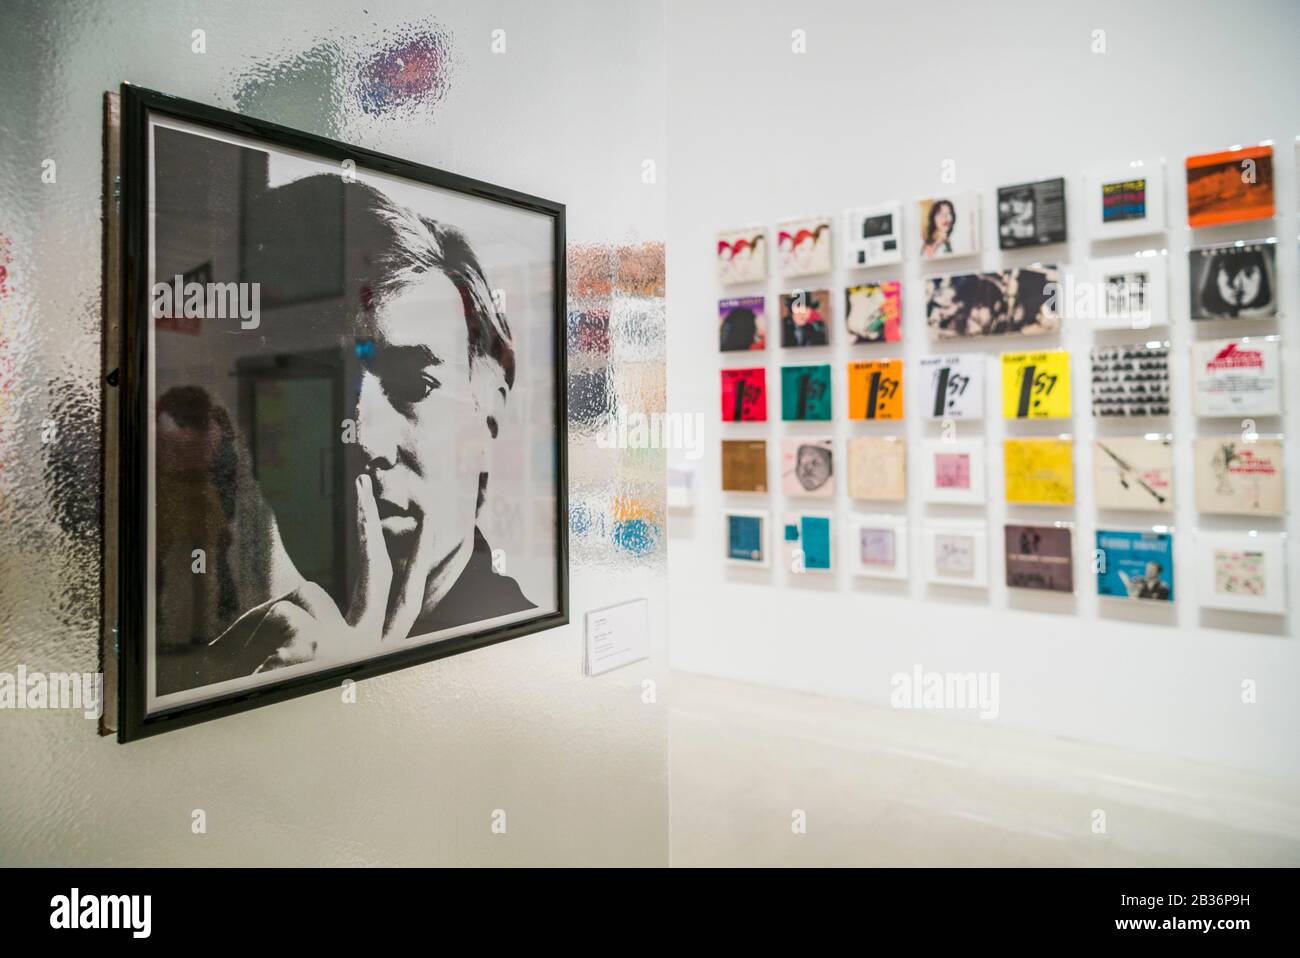 SUECIA, Scania, Malmo, moderna Museet Malmo Museo de Arte moderno,  exposición de portadas de discos diseñados por el artista Andy Warhol  Fotografía de stock - Alamy